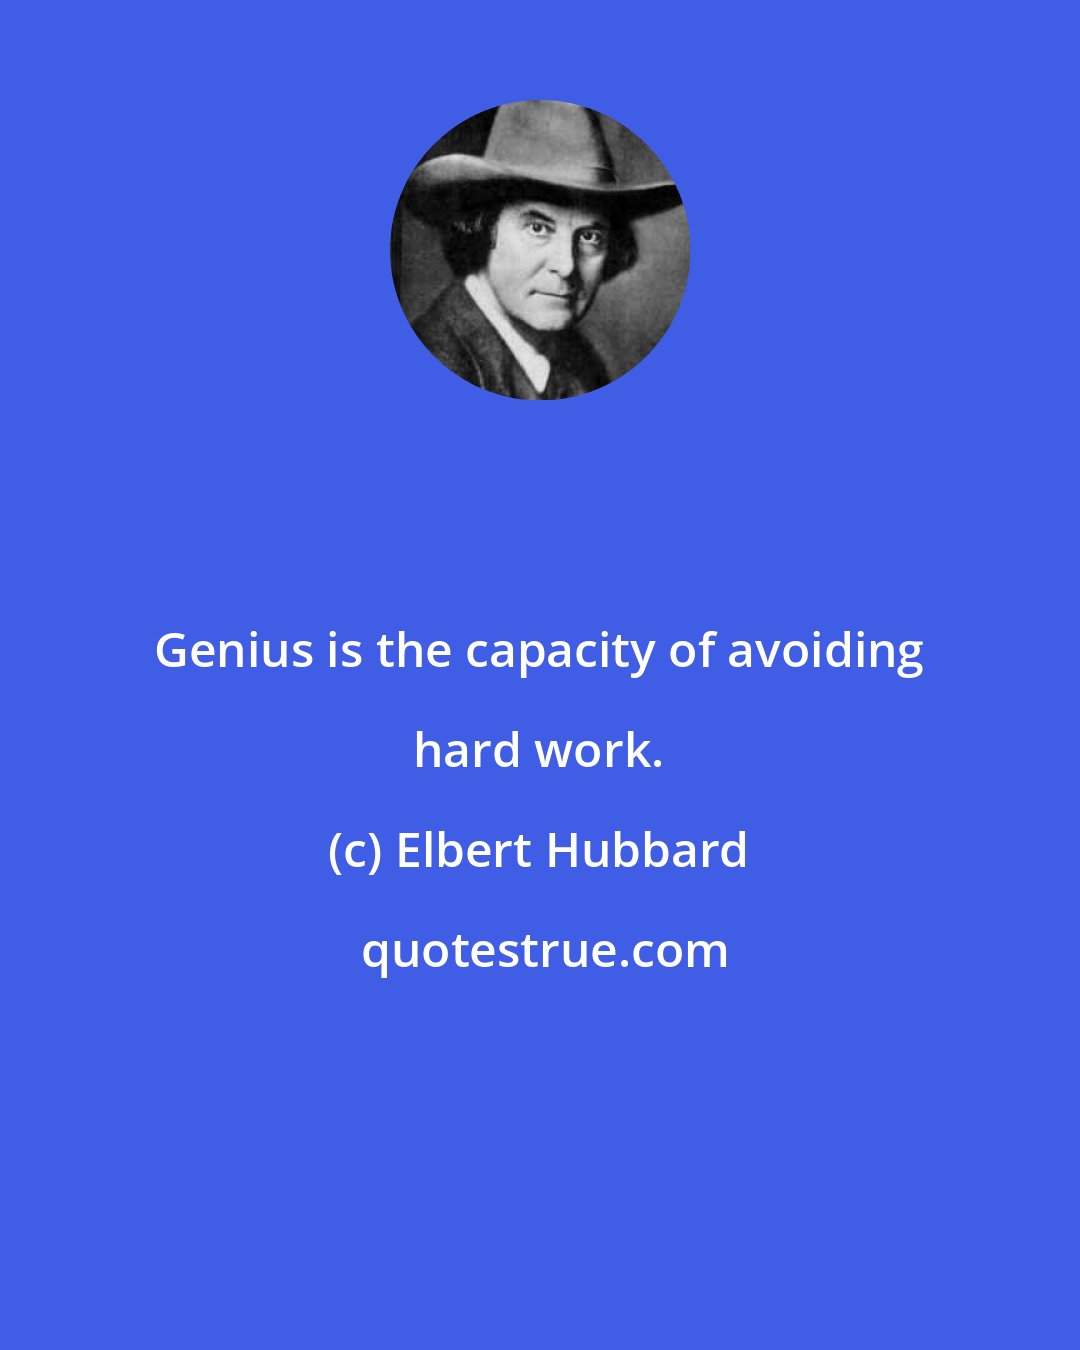 Elbert Hubbard: Genius is the capacity of avoiding hard work.